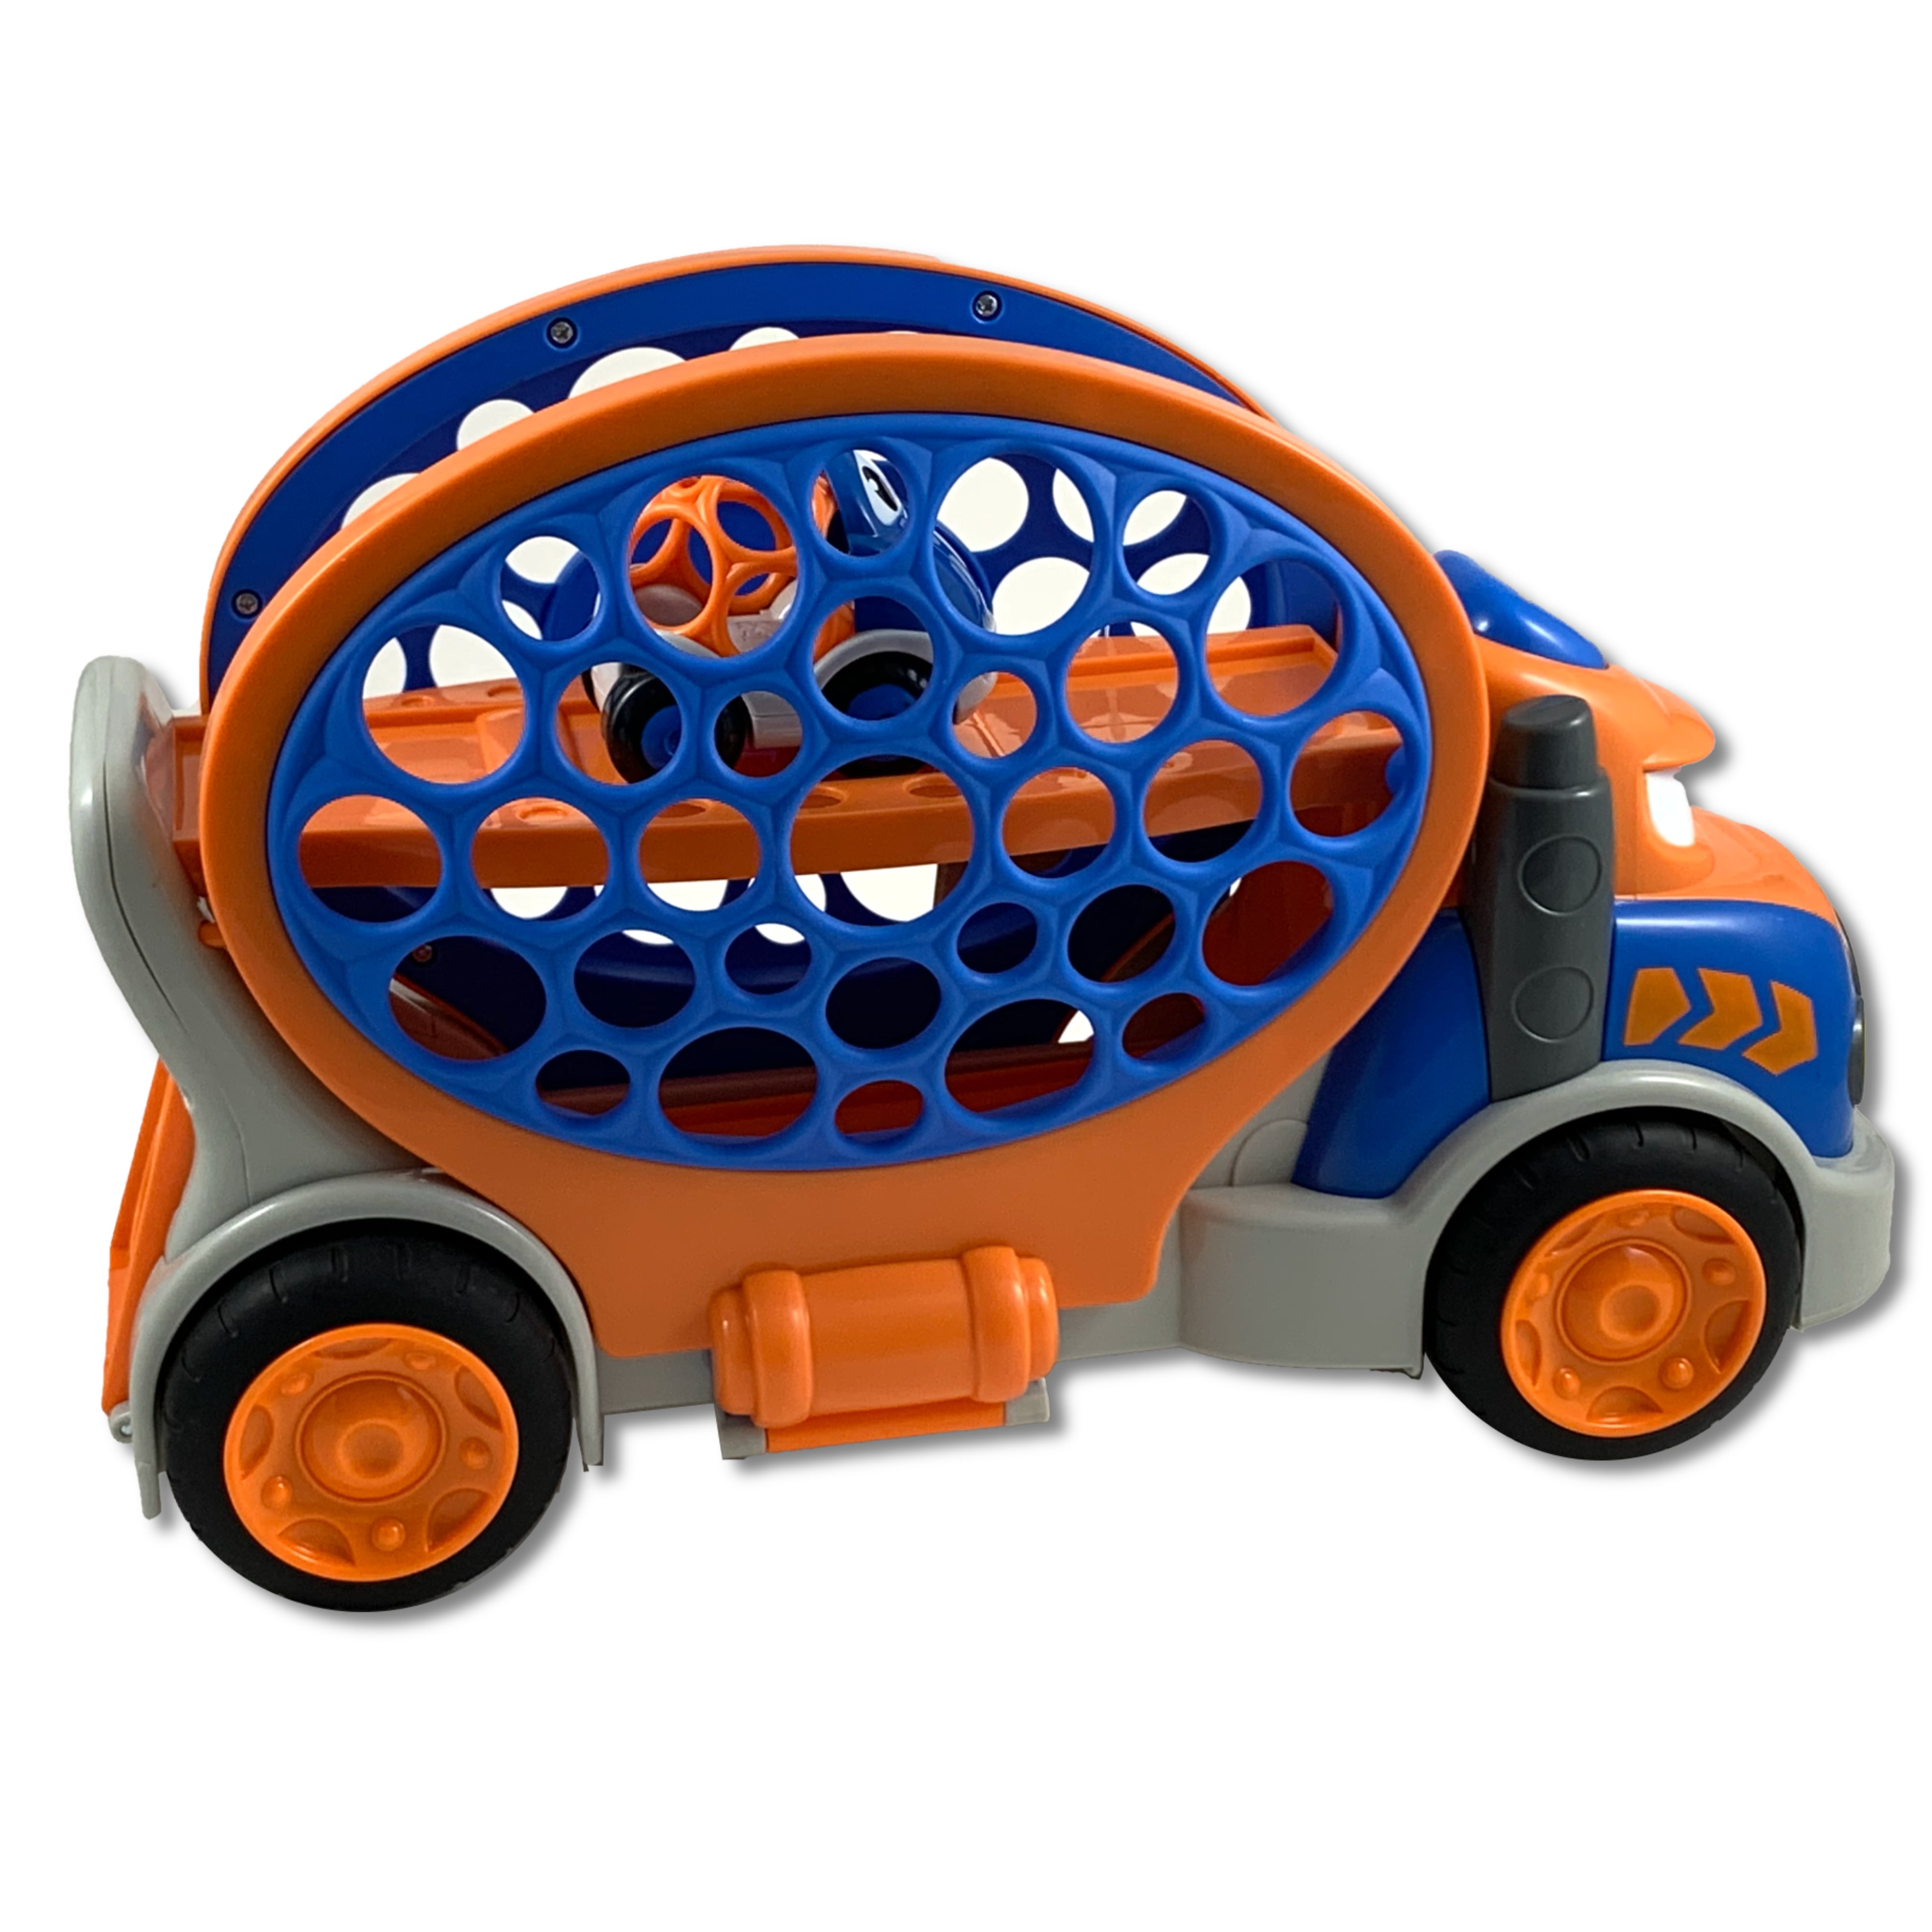 Oball Go Grippers Car Carrier dein erster Autotransporter inkl.einem Oball Auto